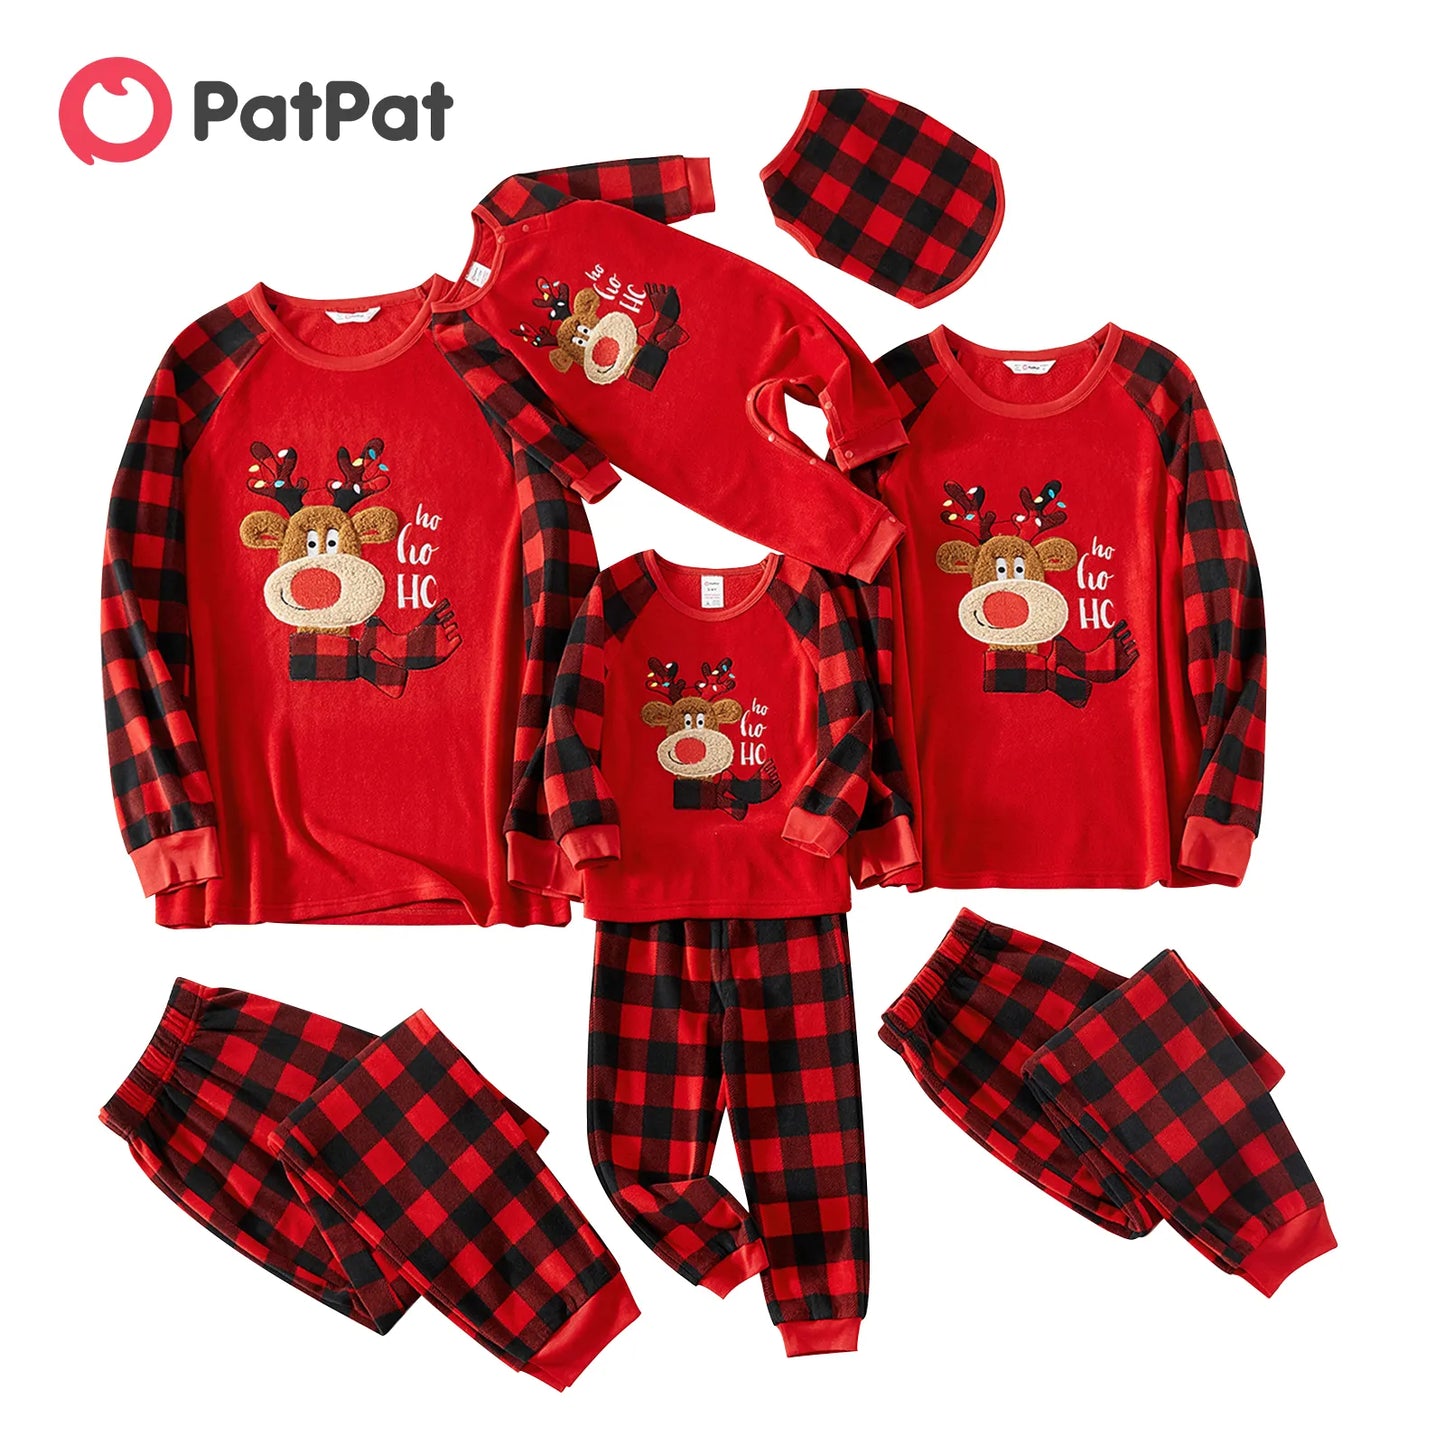 PatPat Christmas Family Matching Pajamas Reindeer Embroidered Plaid Th ...